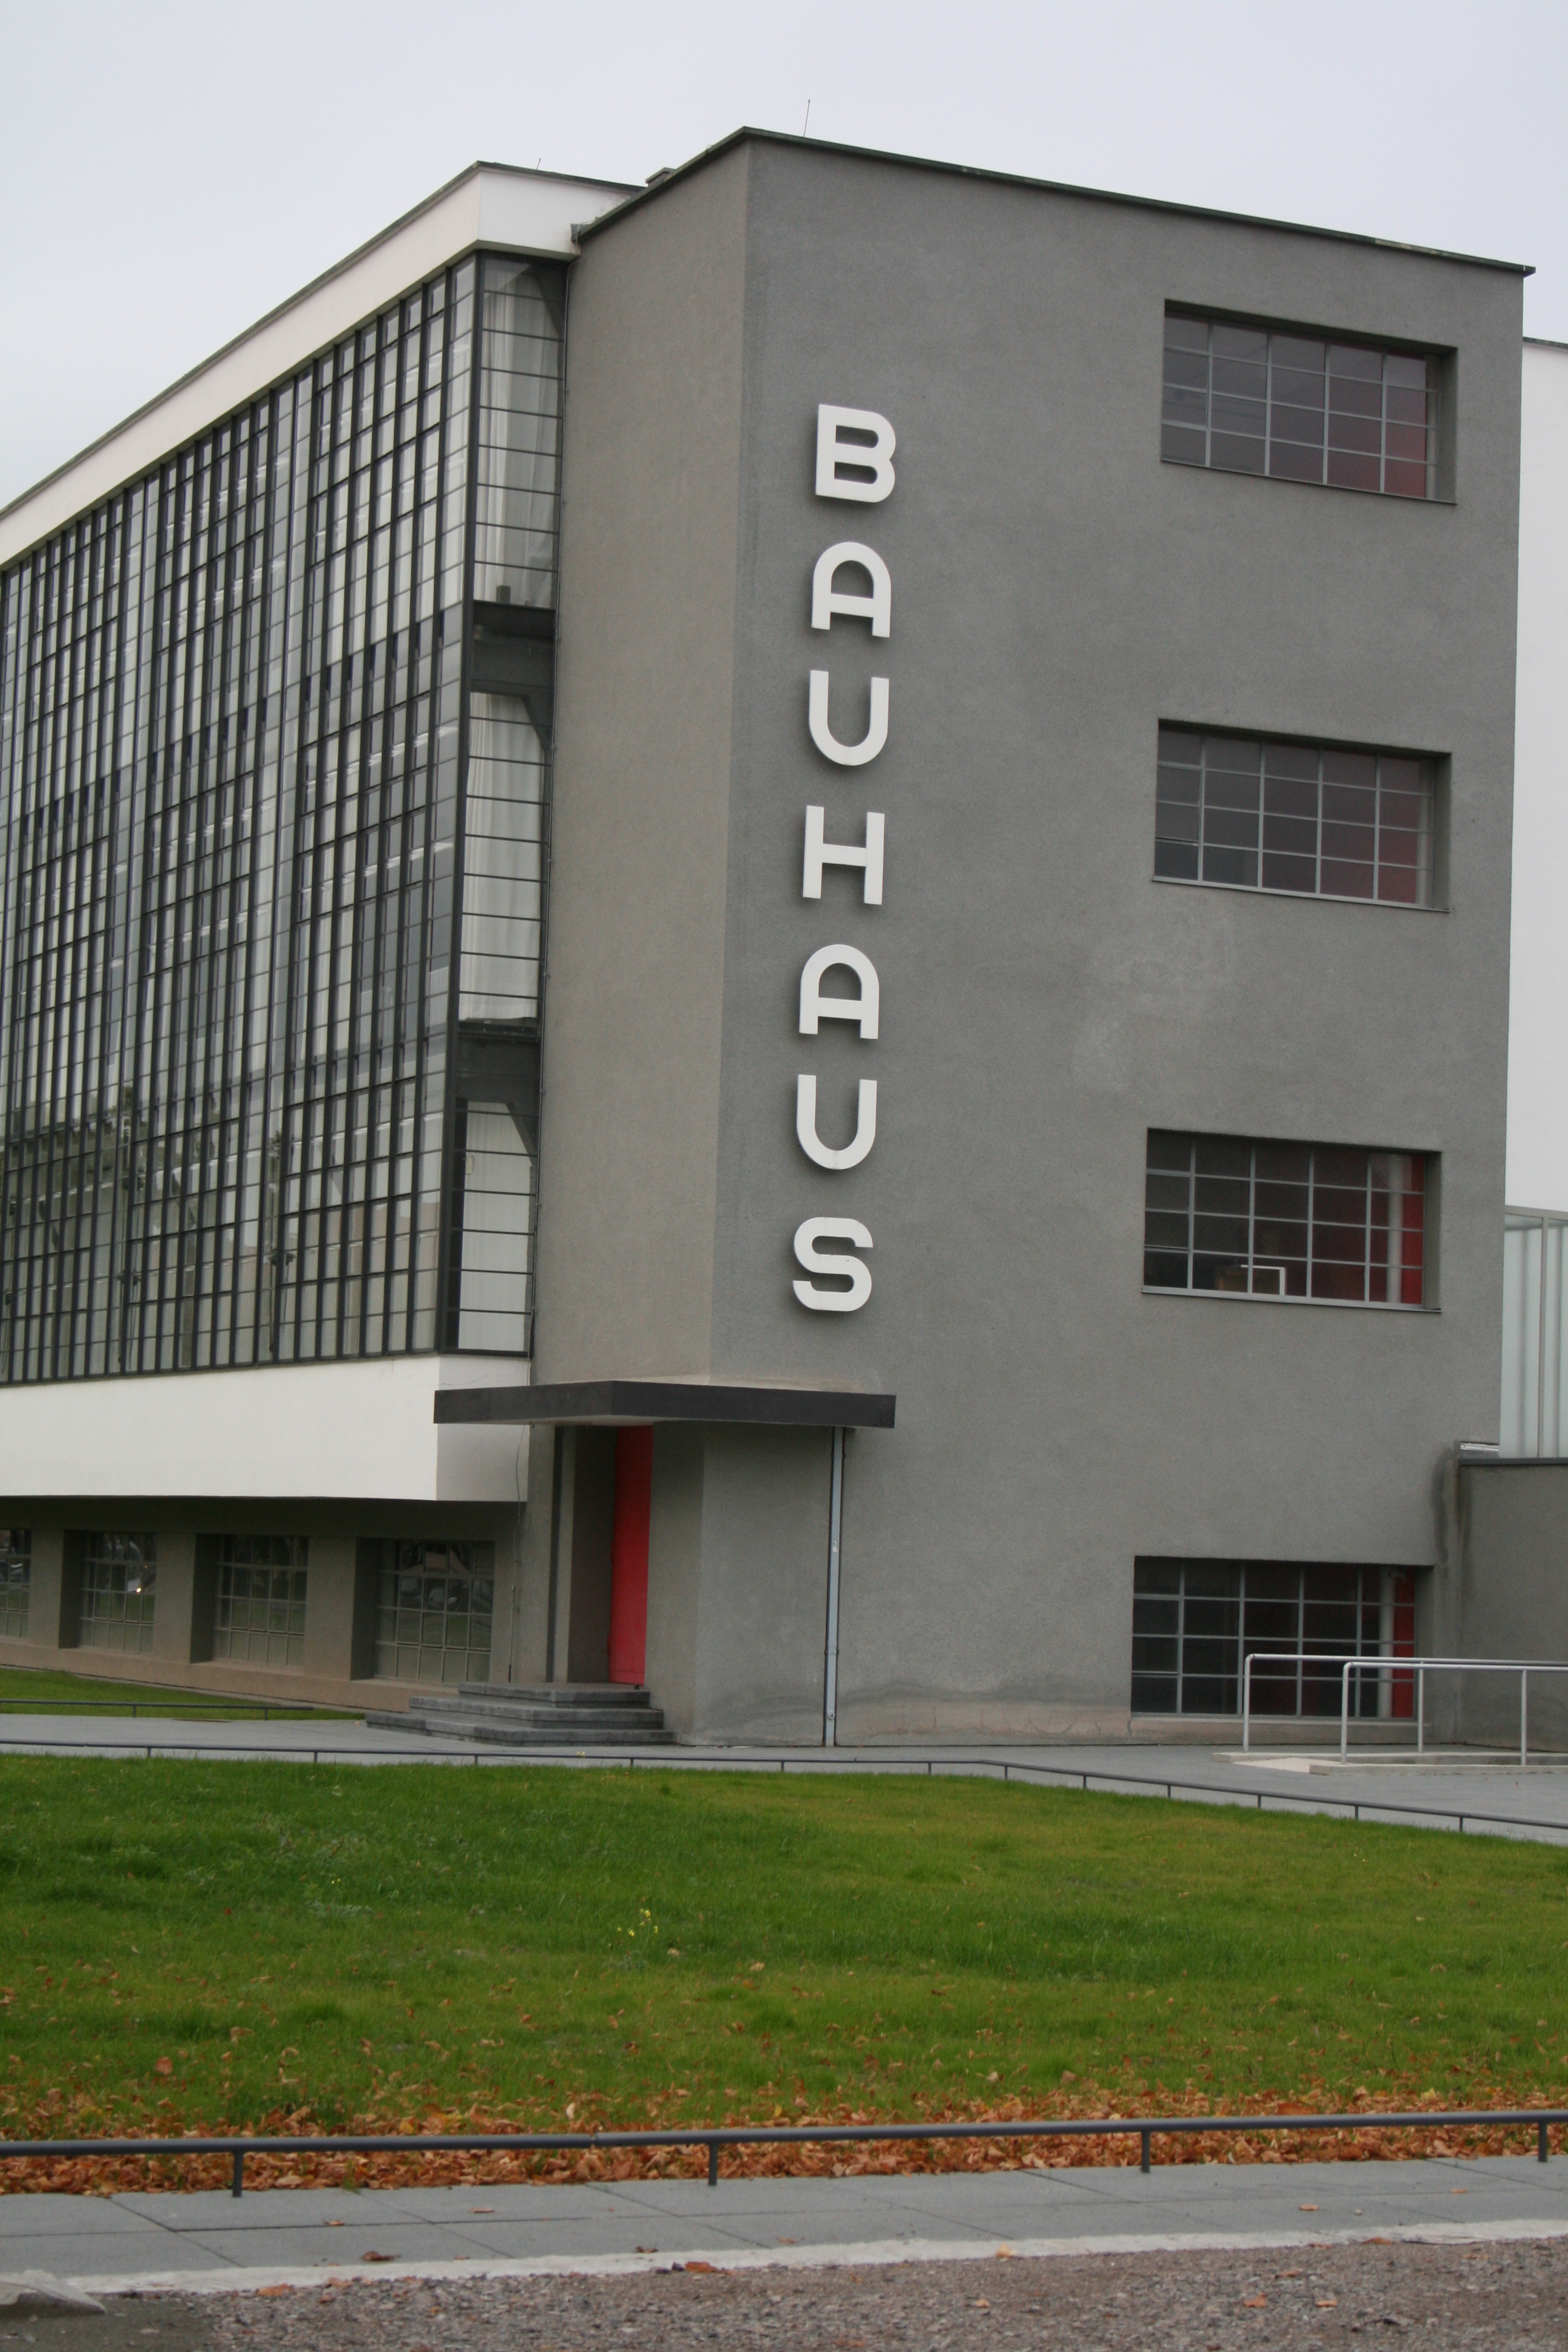 Tour of Bauhaus Germany